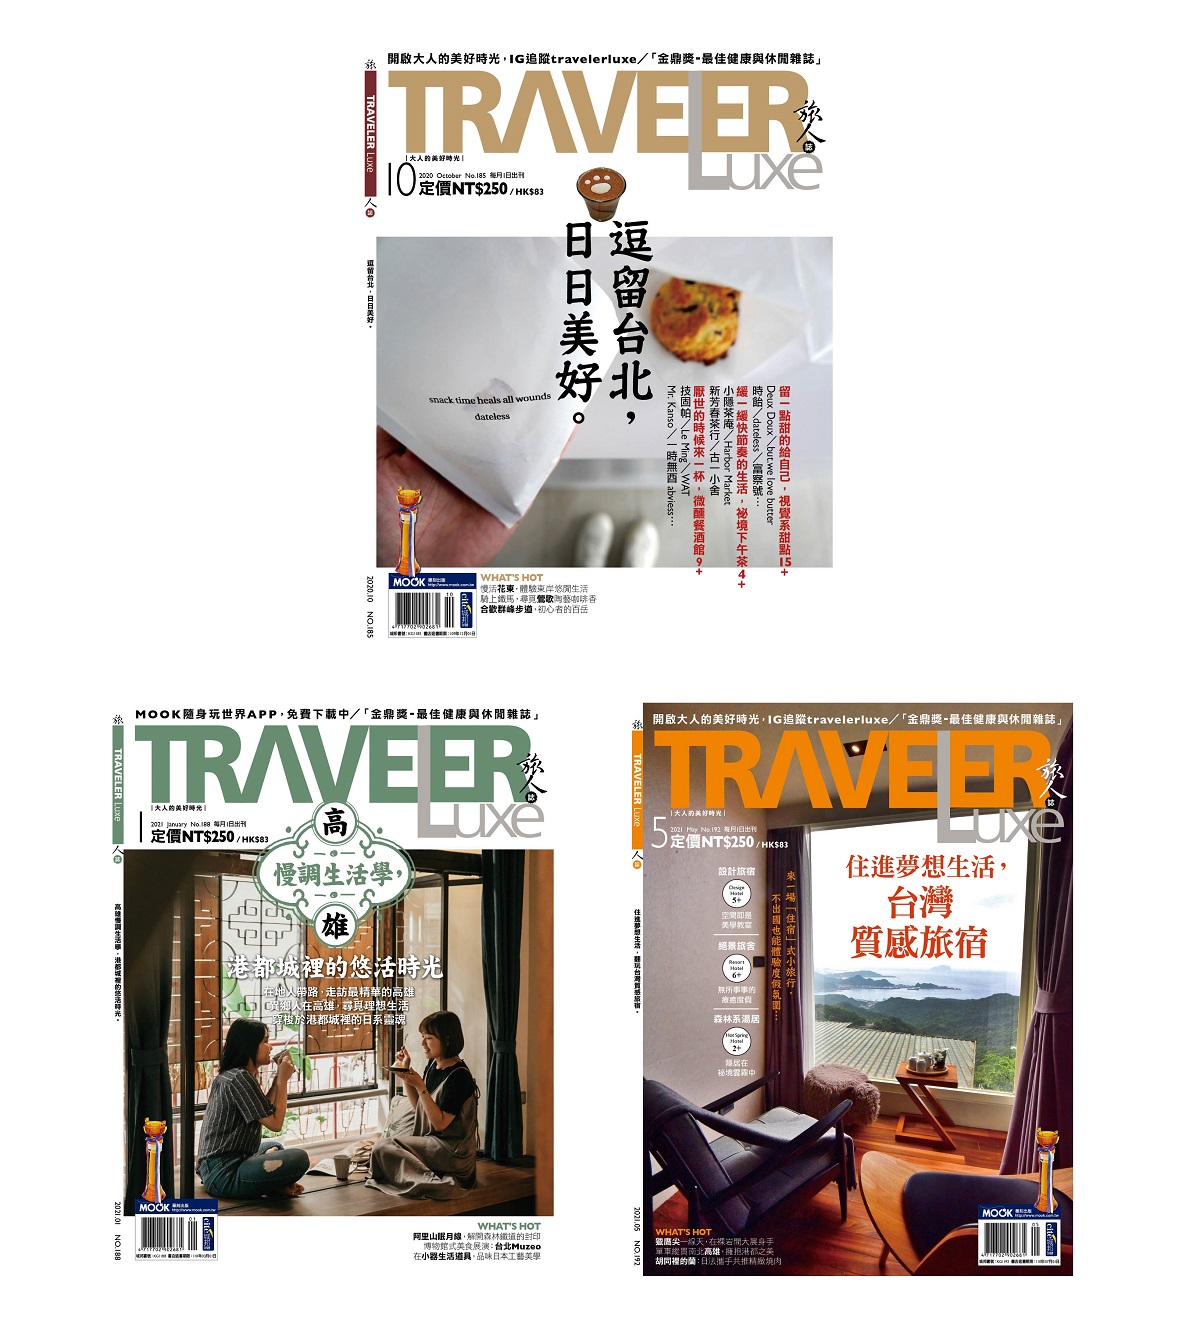 TRAVELER LUXE 旅人誌 3 in 1 典藏套裝：台灣巡遊